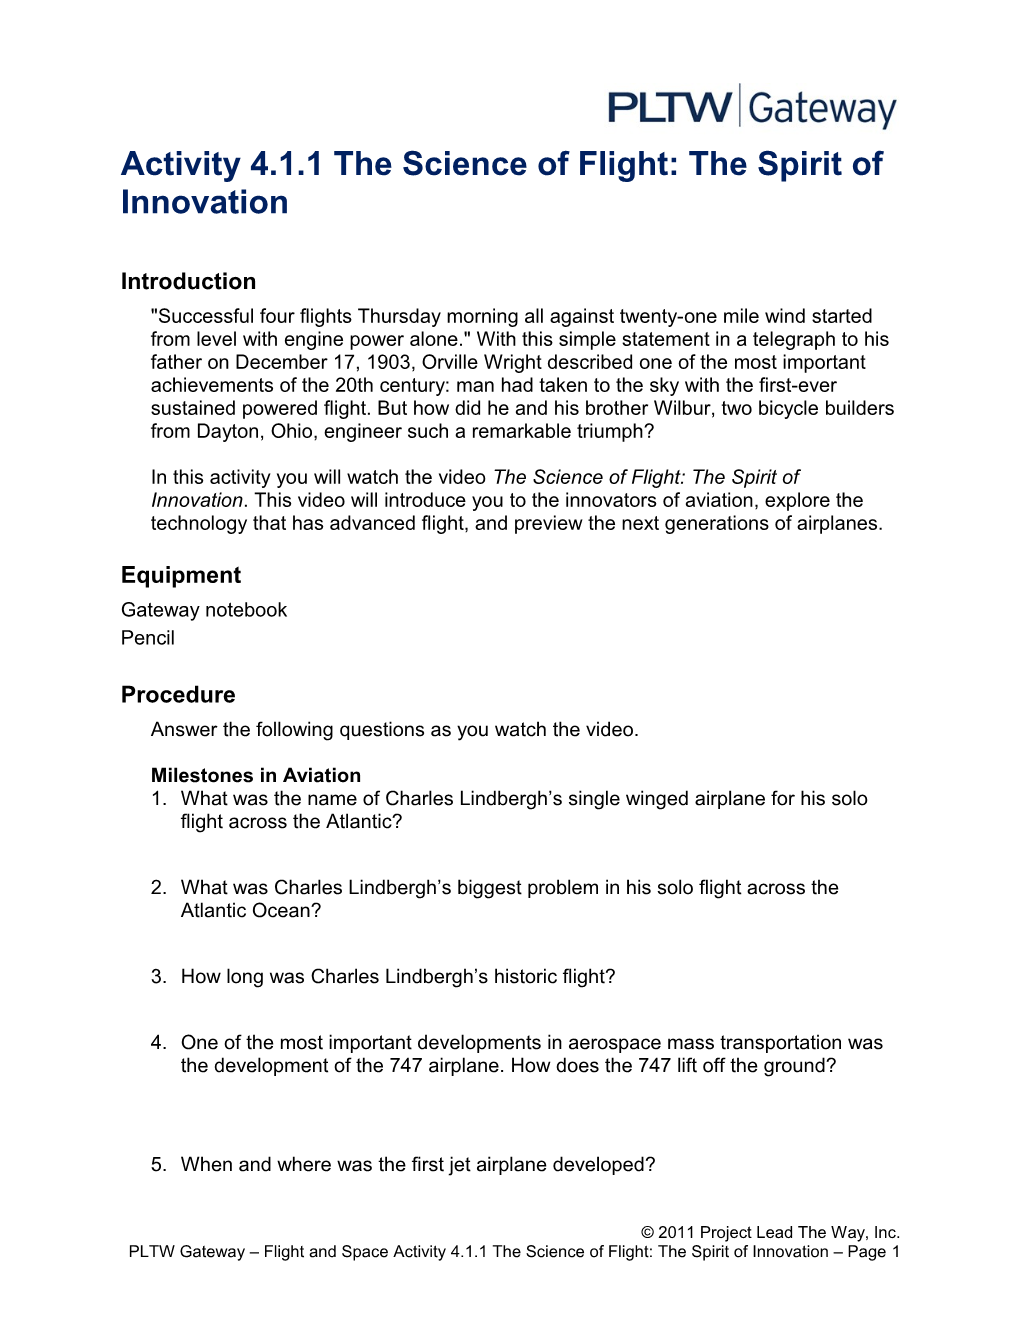 Activity 4.1.1 the Science of Flight: the Spirit of Innovation